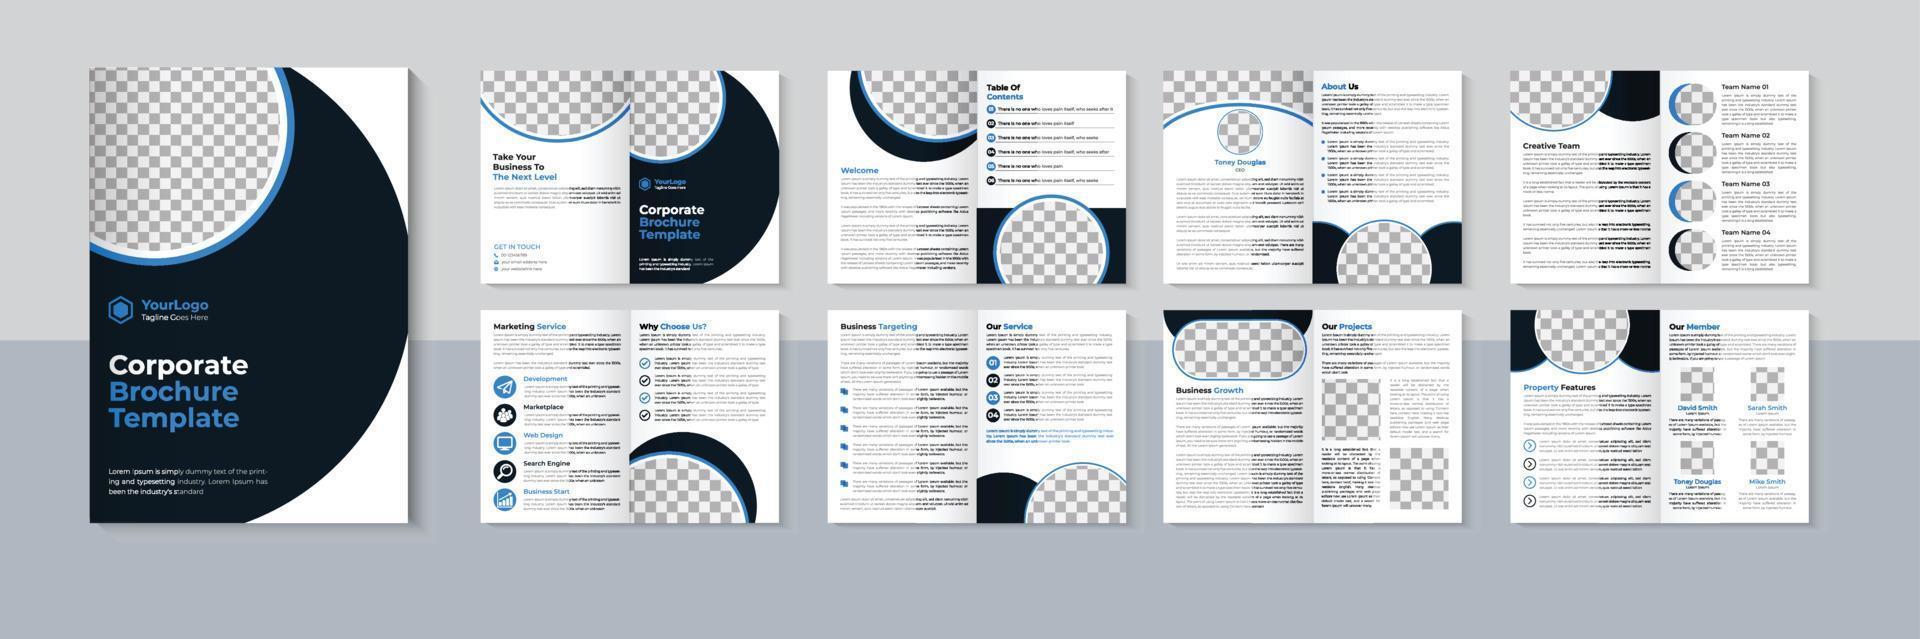 Company Profile Brochure Design, Business 16 Page Brochure Template, Corporate Brochure Design, Pro Vector